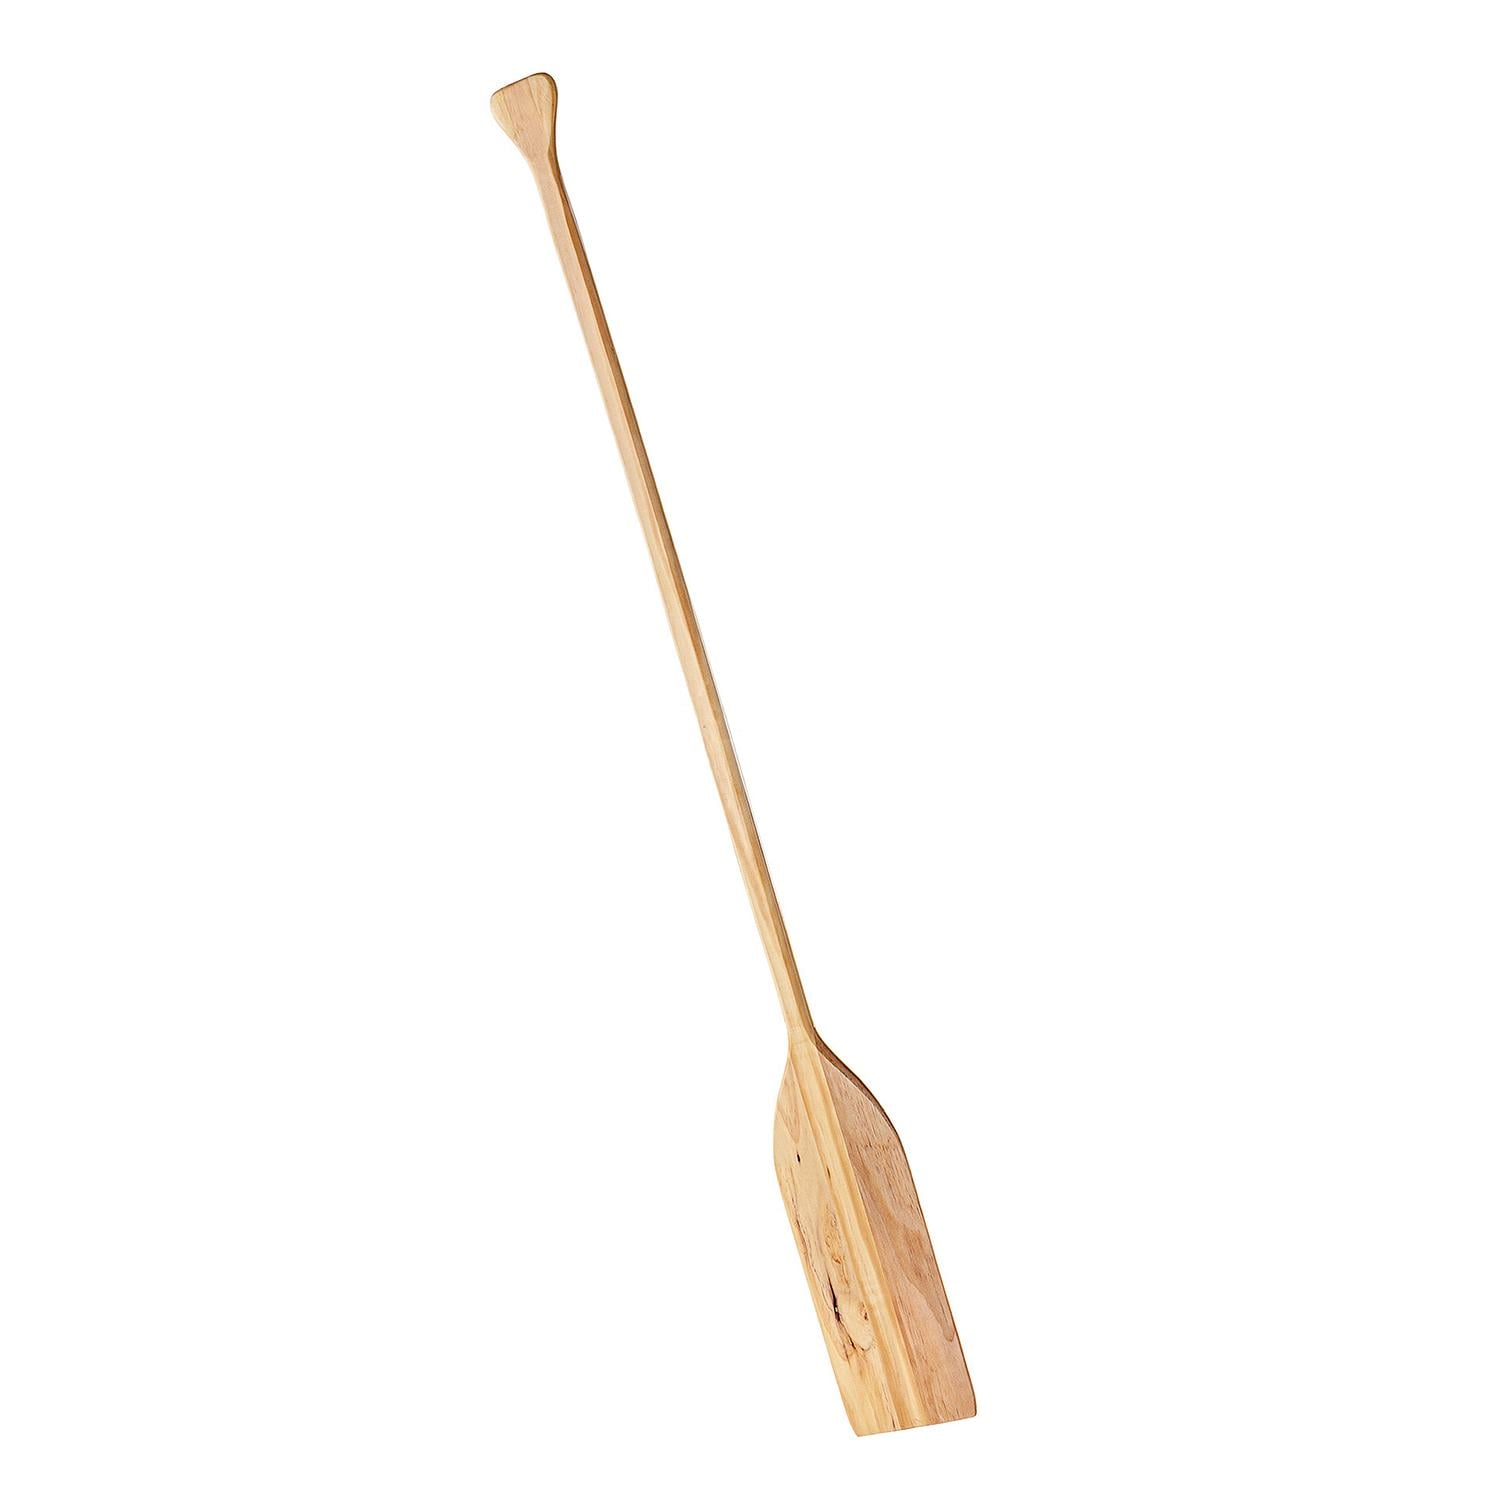 Seachoice Standard Wood Paddle